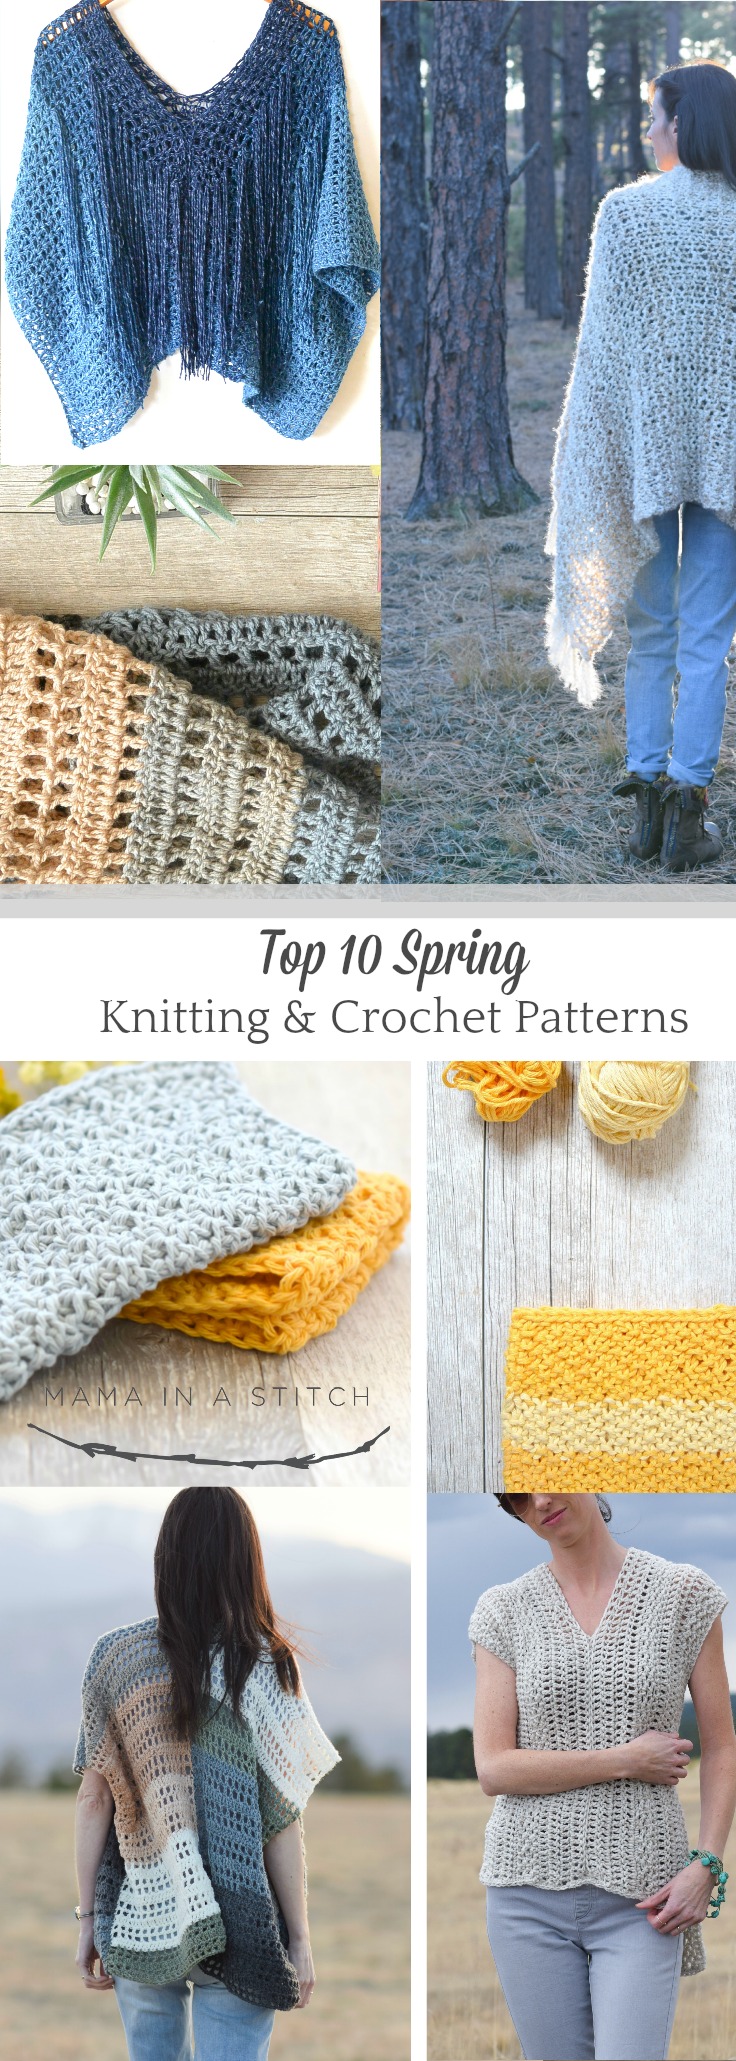 Top 10 Spring Knitting & Crochet Patterns